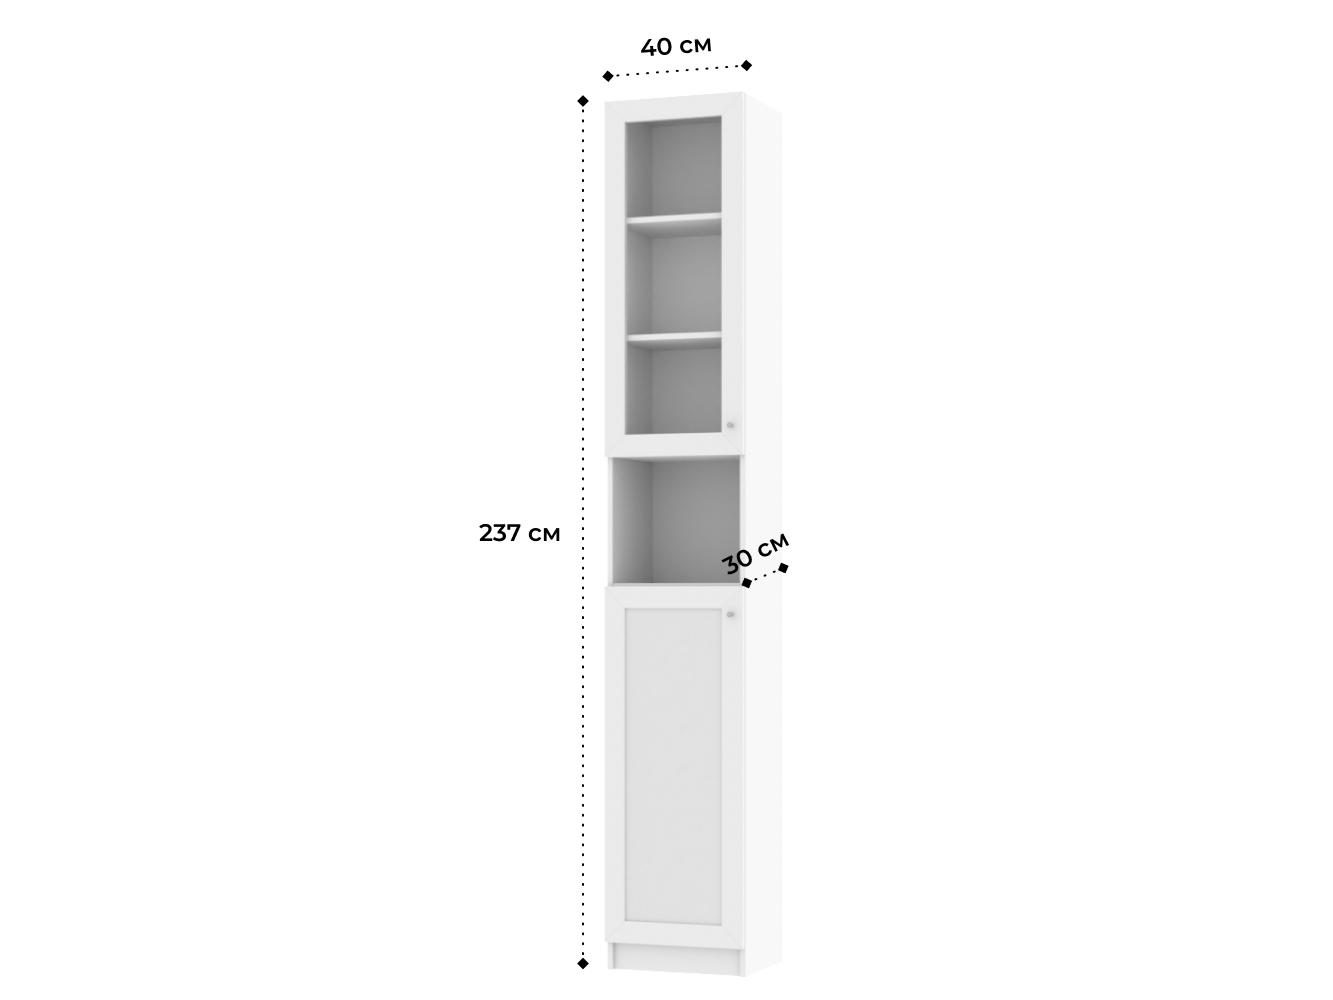  Книжный шкаф Билли 329 white ИКЕА (IKEA) изображение товара